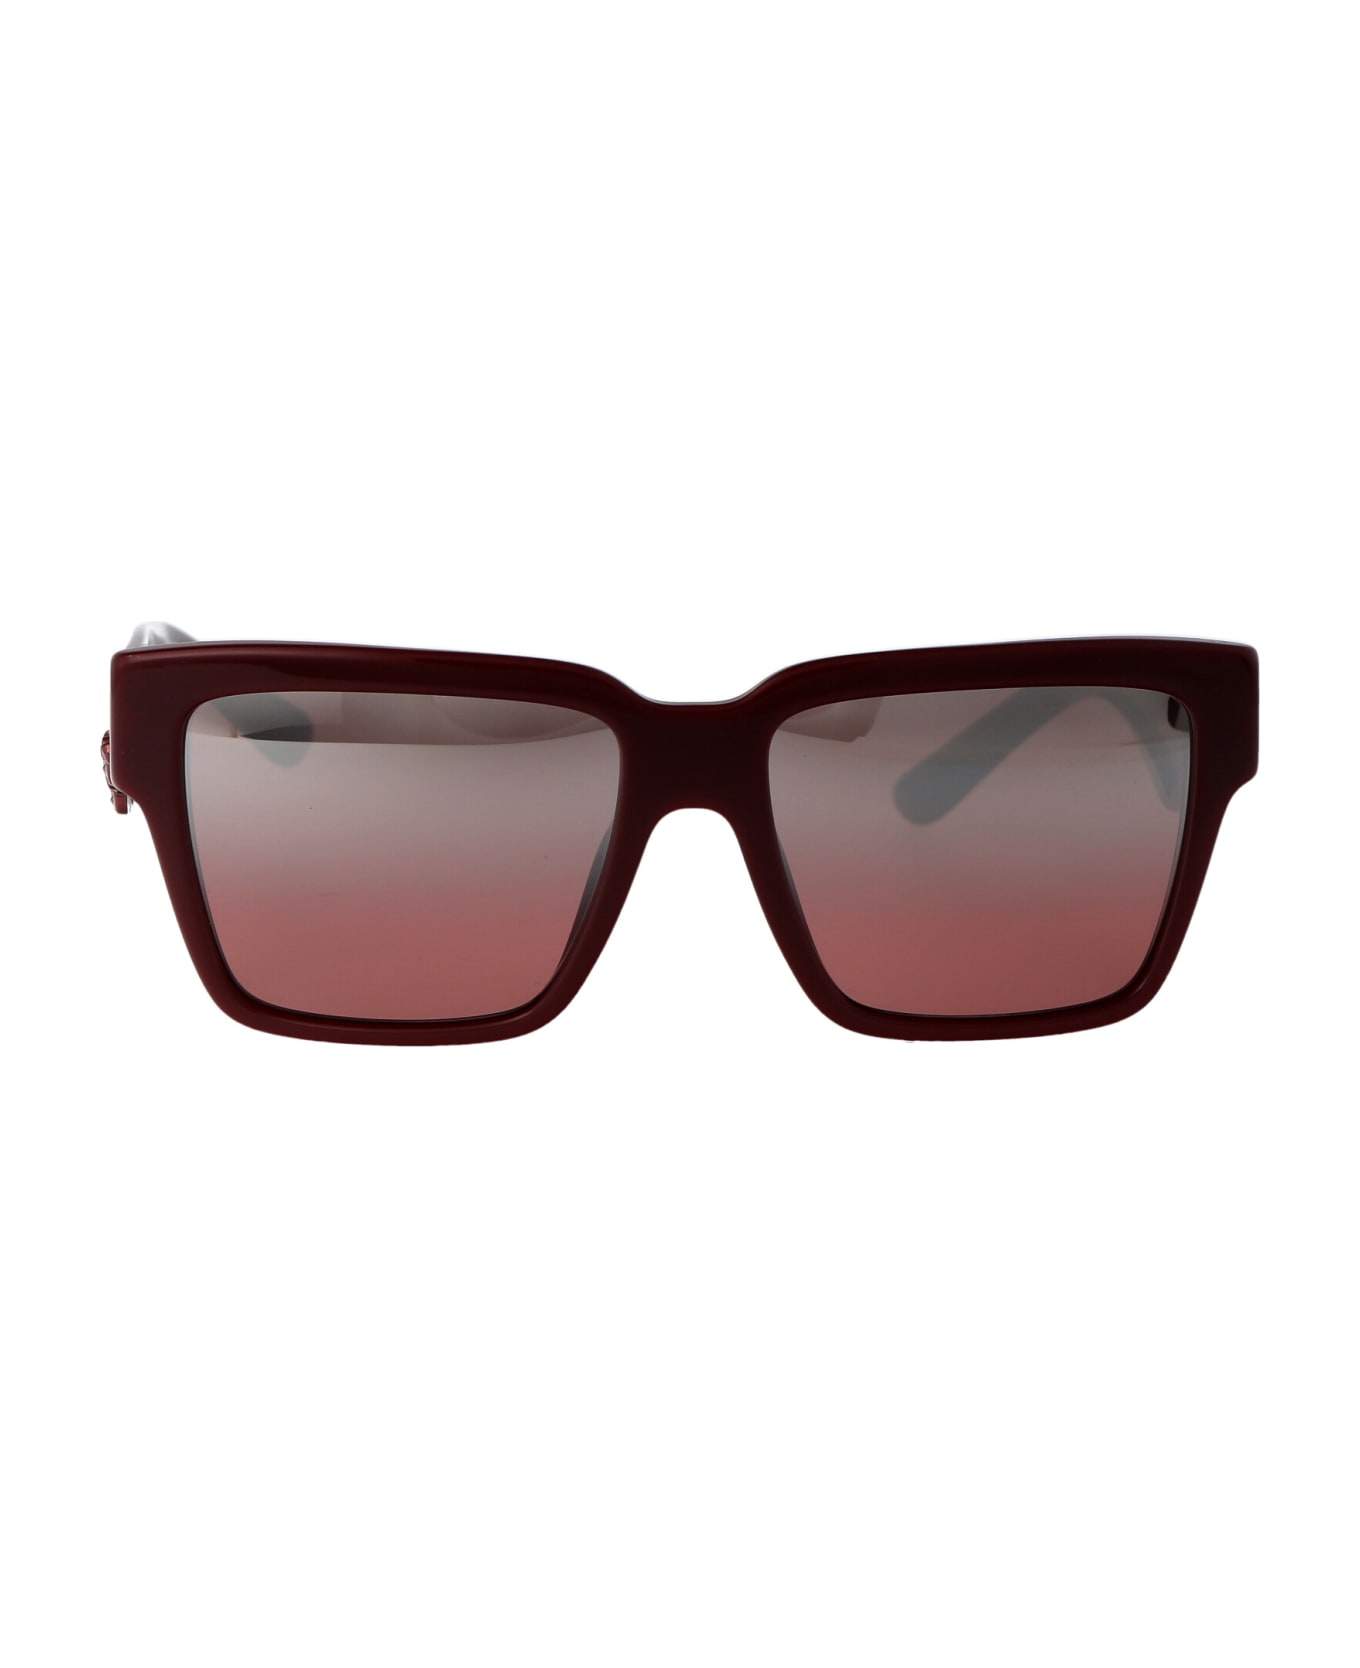 Dolce & Gabbana Eyewear 0dg4436 Sunglasses - 30917E Bordeuax サングラス